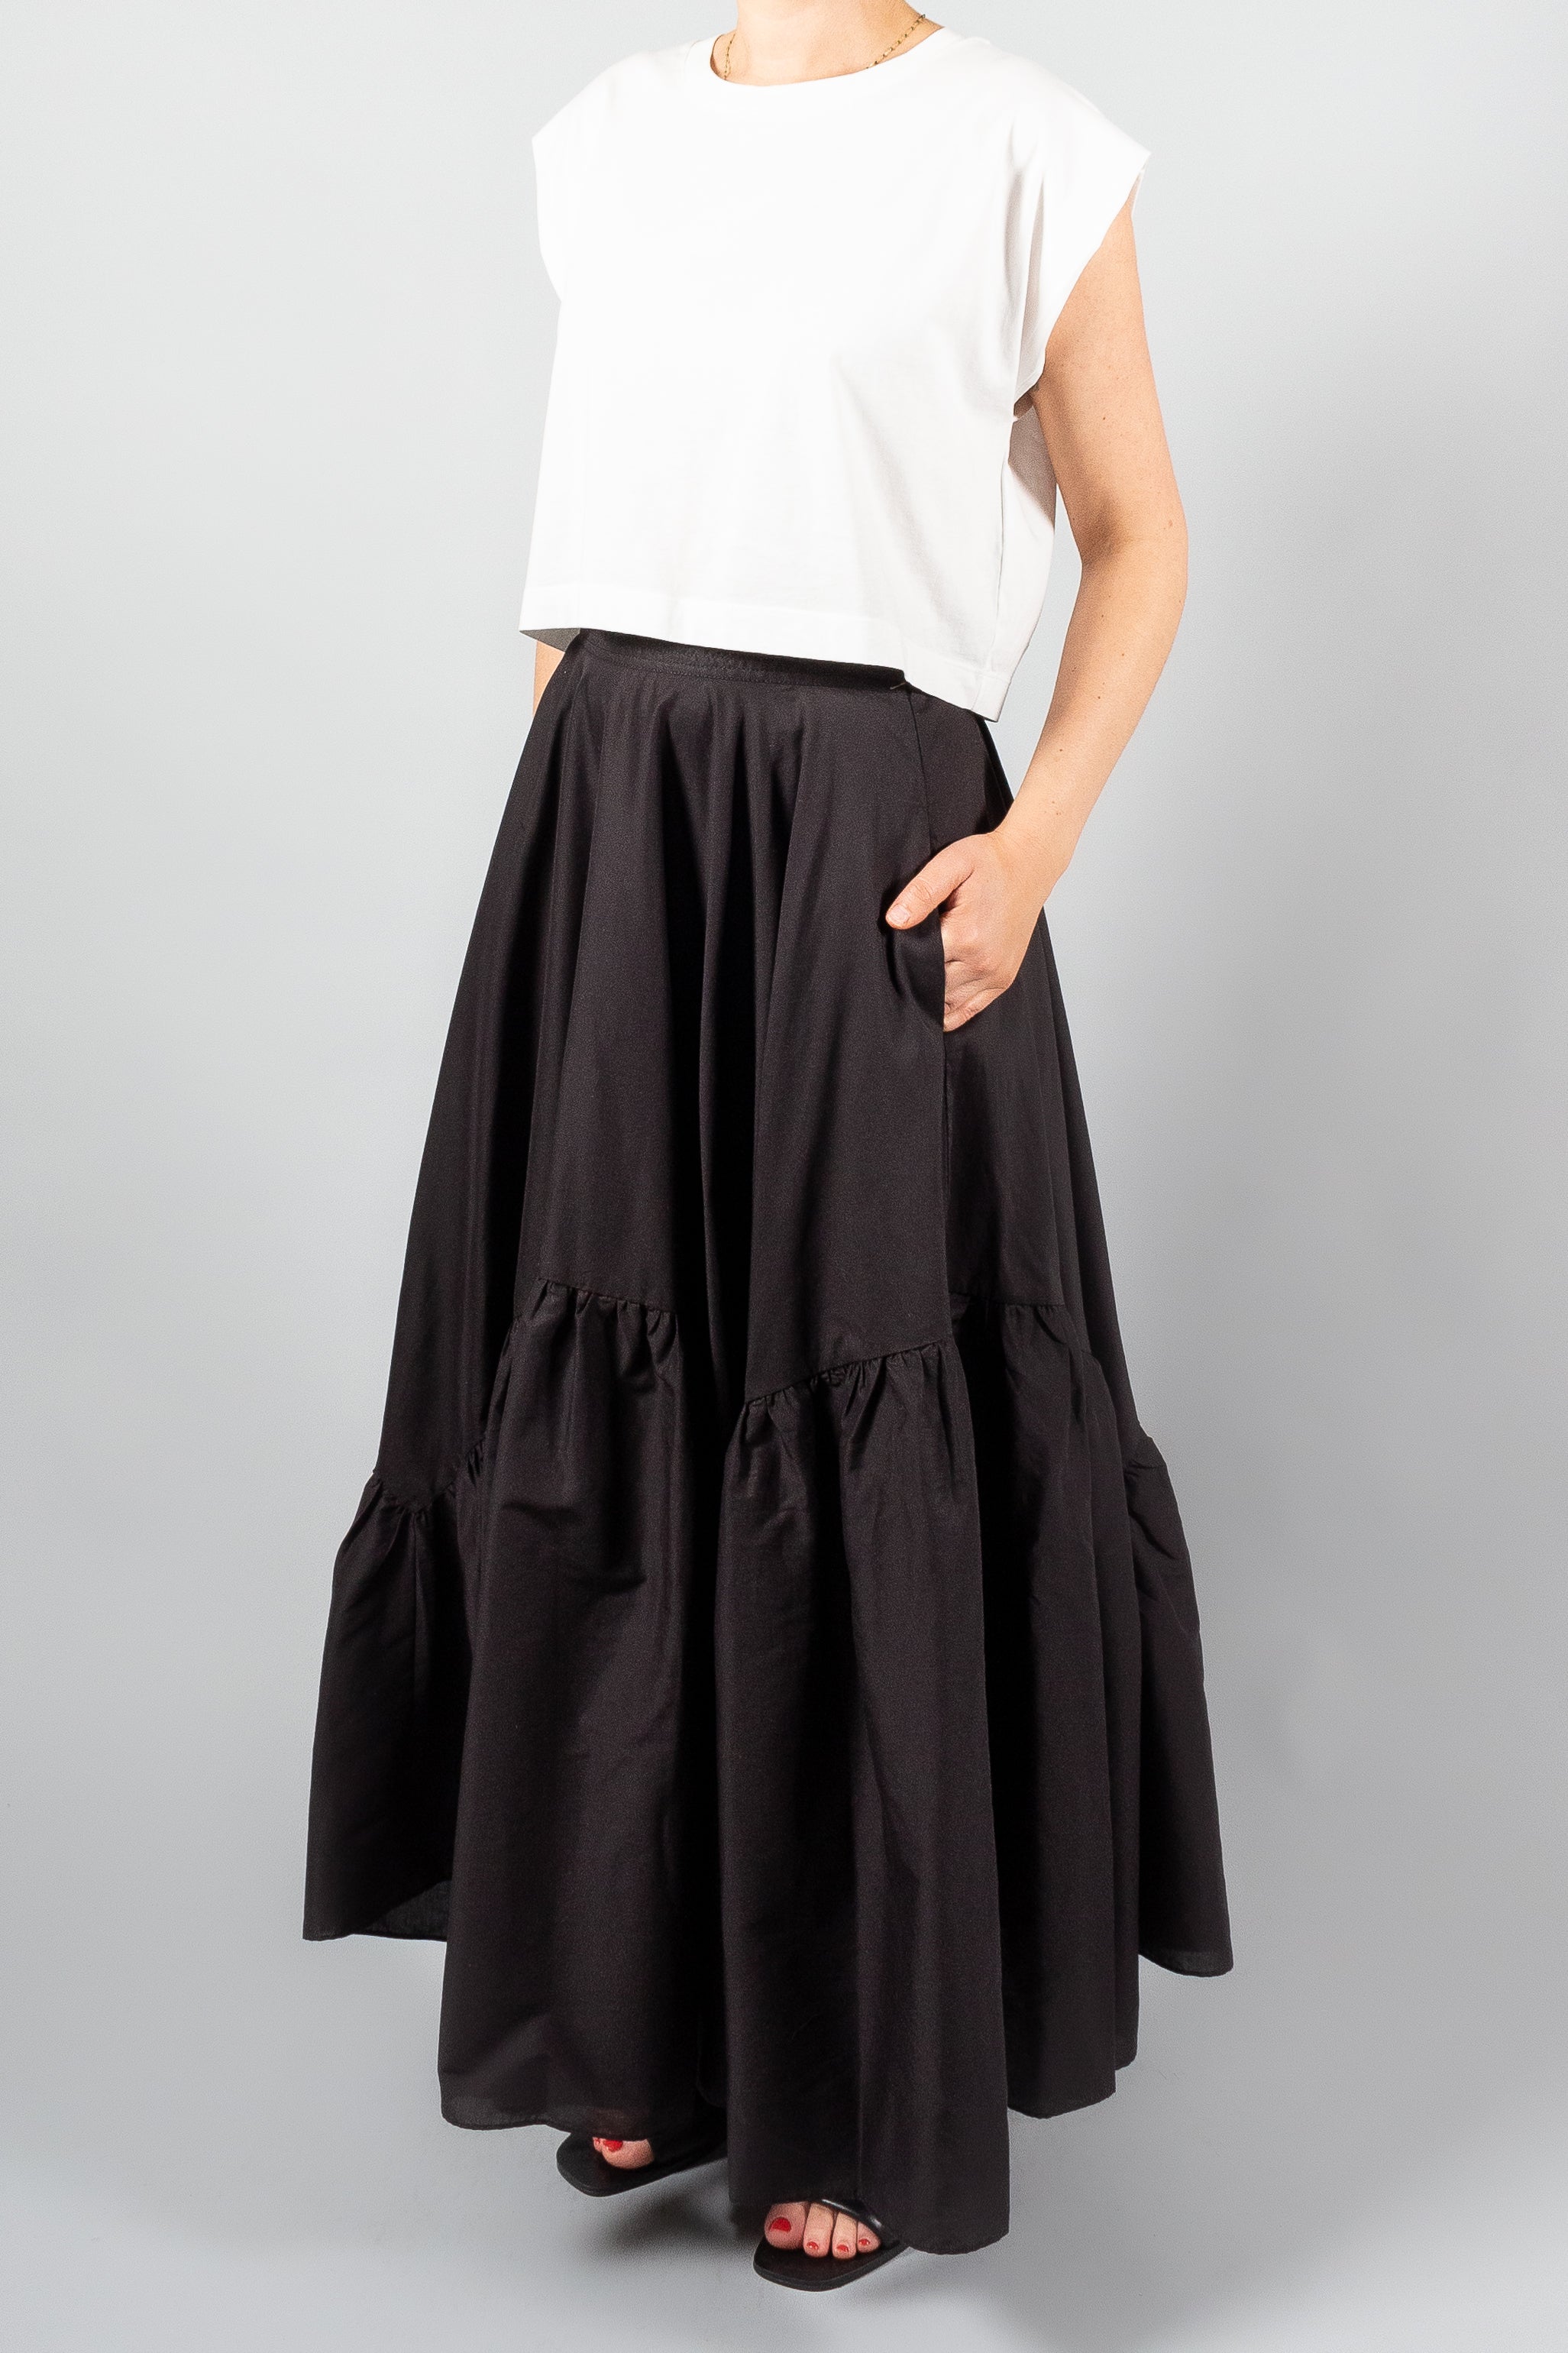 Vanessa Bruno Astree Maxi Skirt-Skirts-Misch-Boutique-Vancouver-Canada-misch.ca